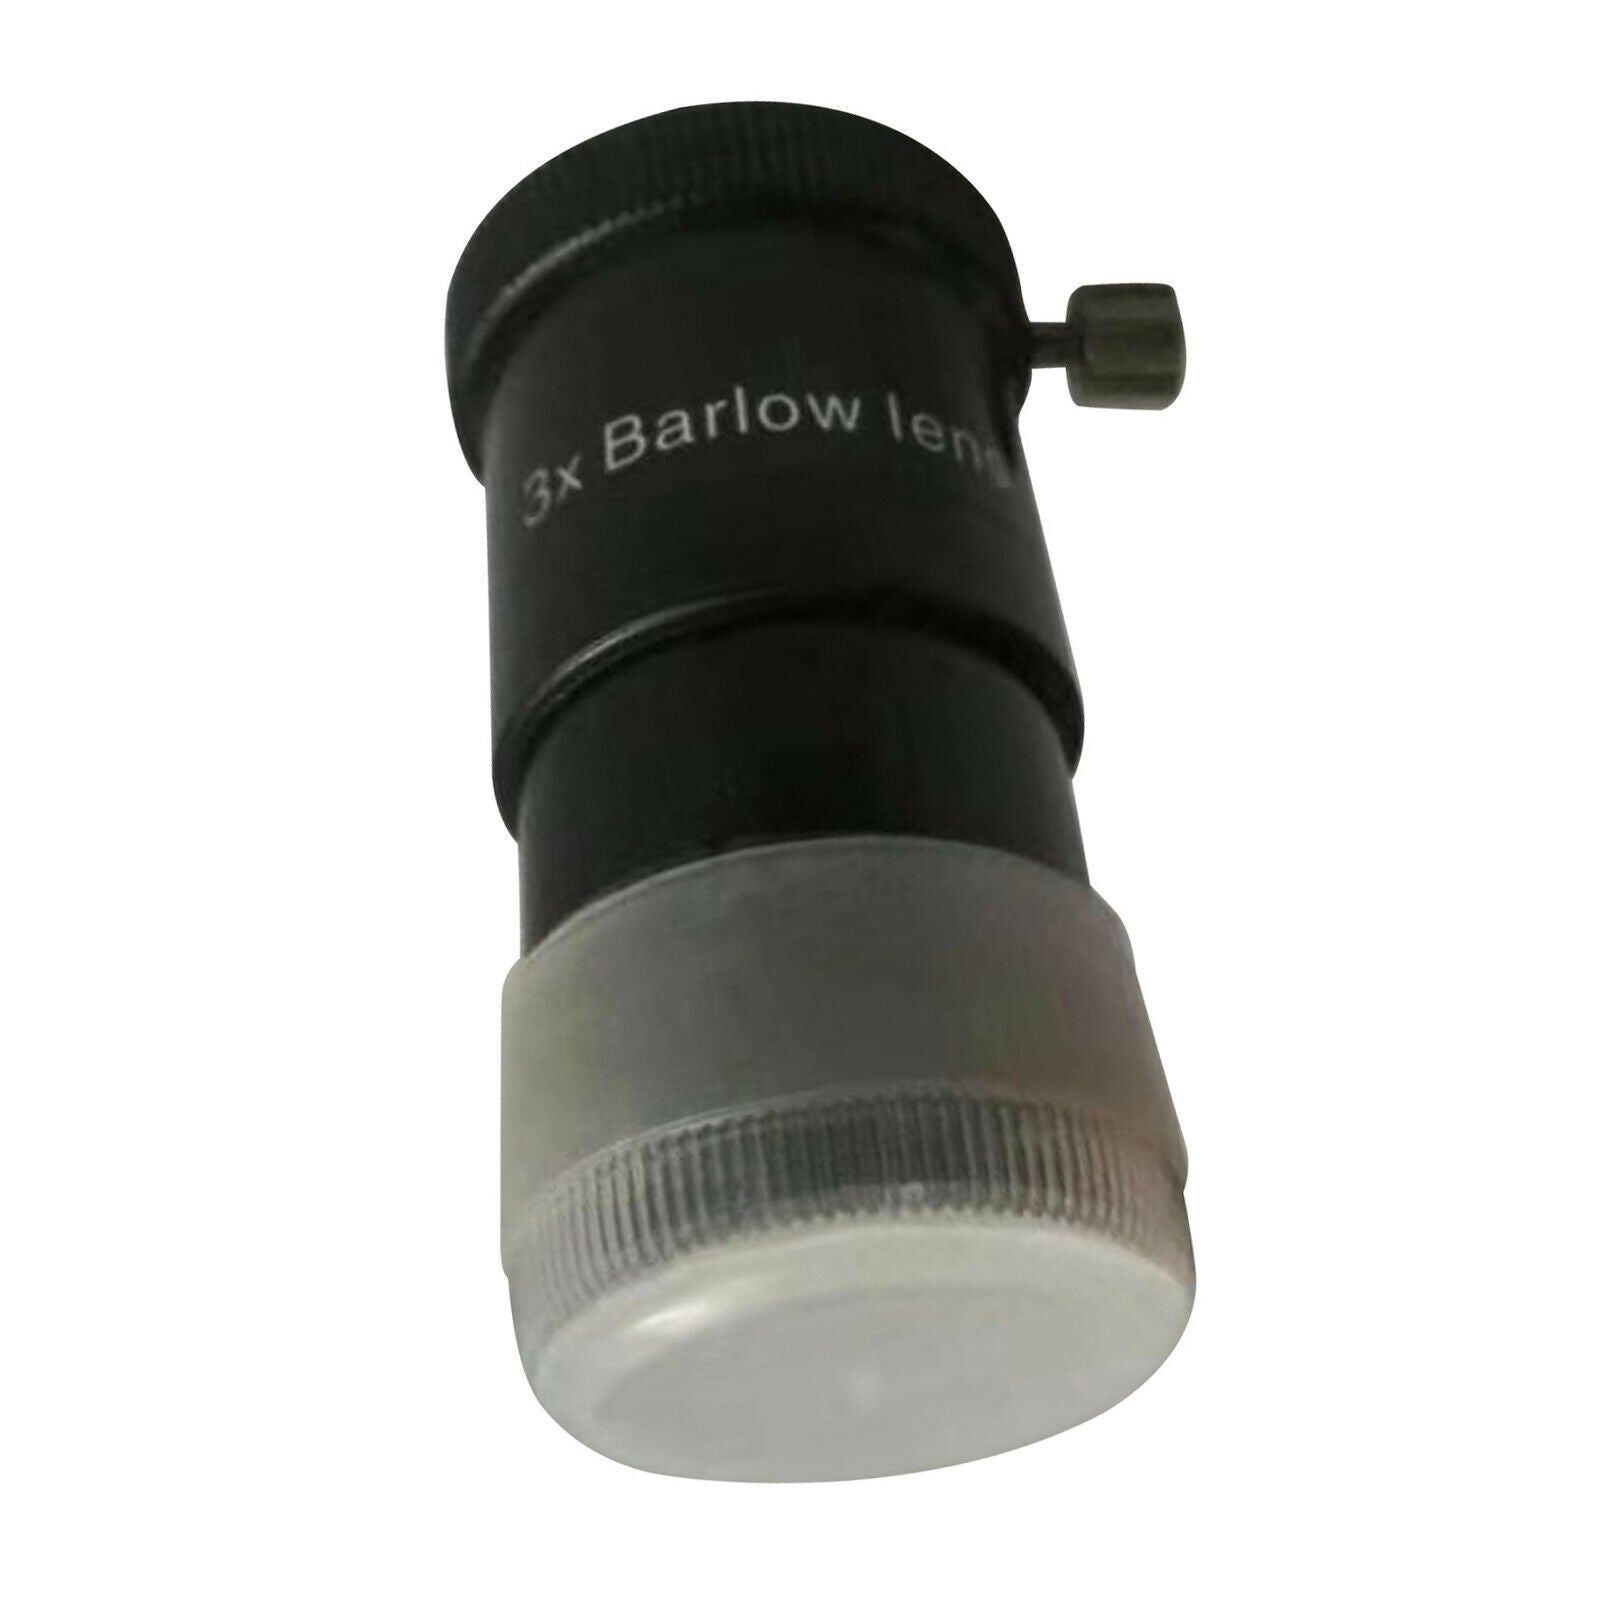 Barlow Lens Astronomy Telescope Eyepiece for   Accessory Black